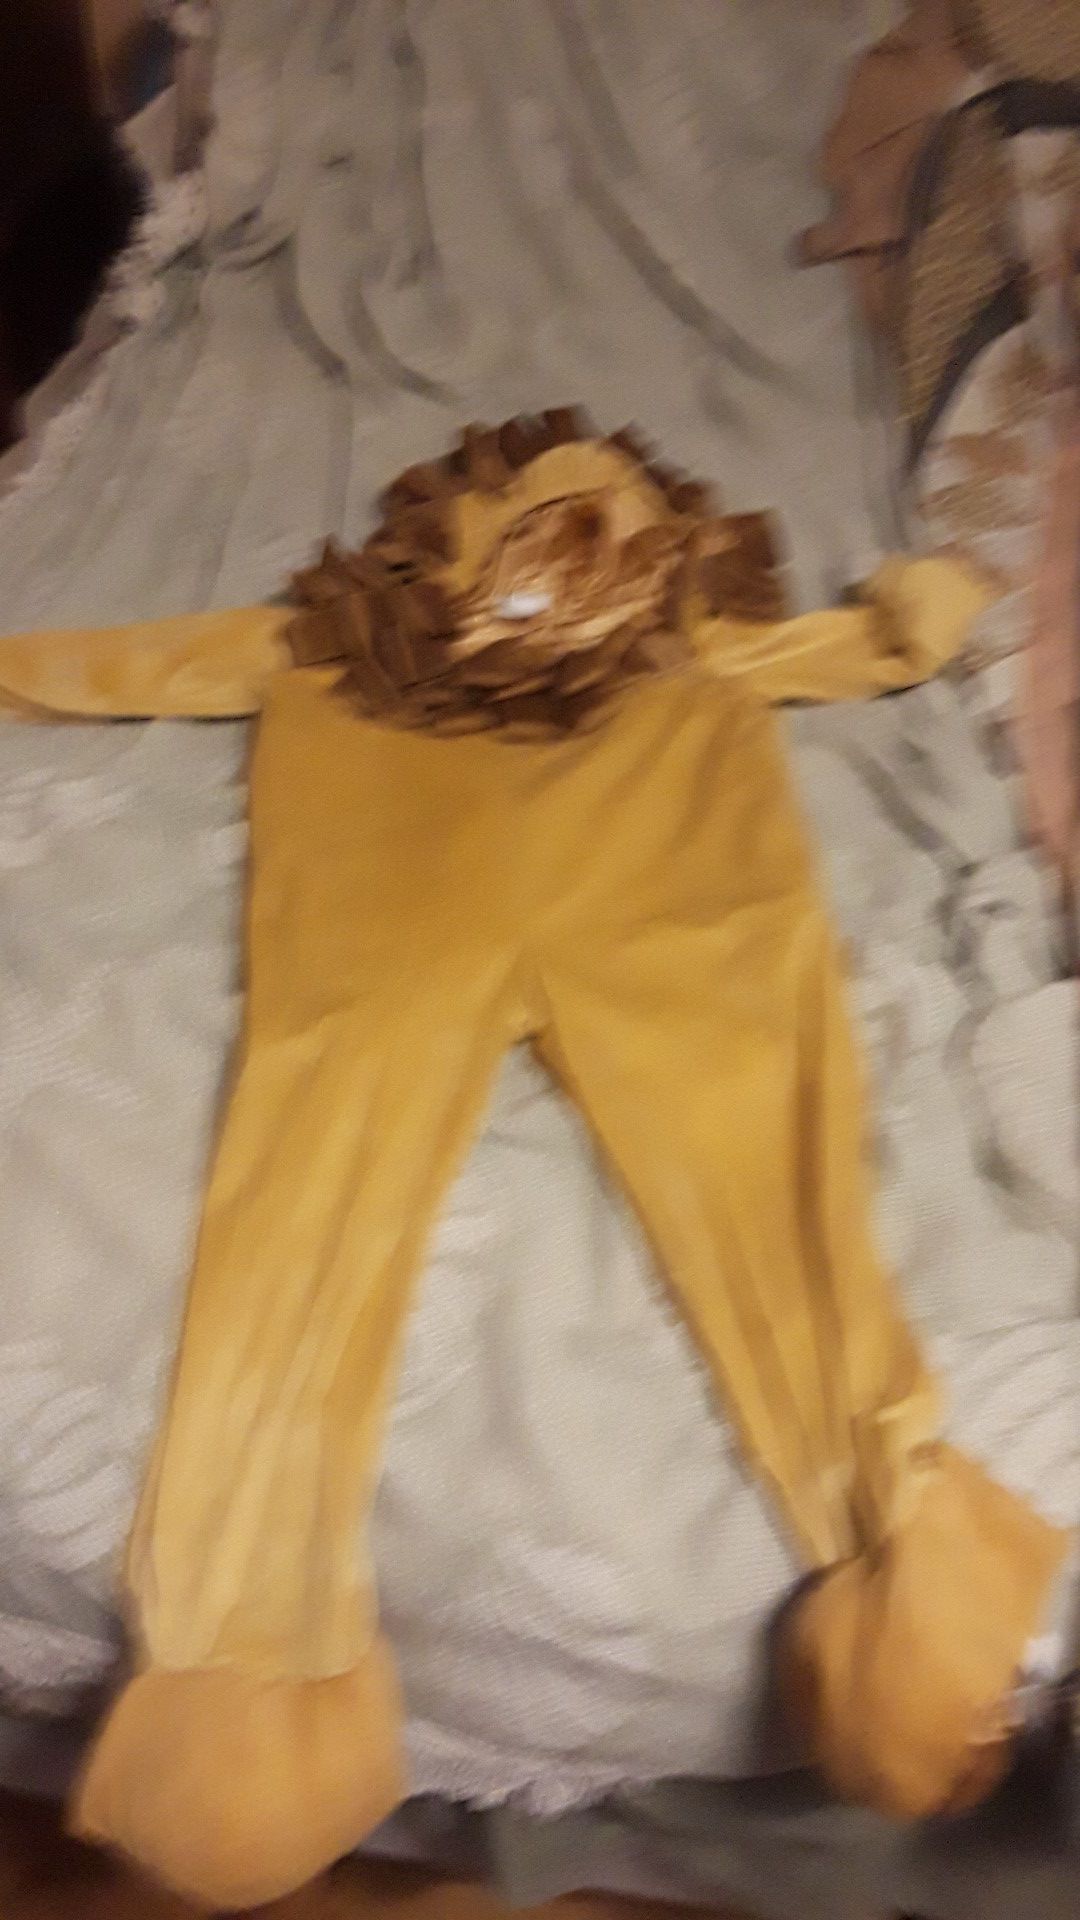 Lion costume